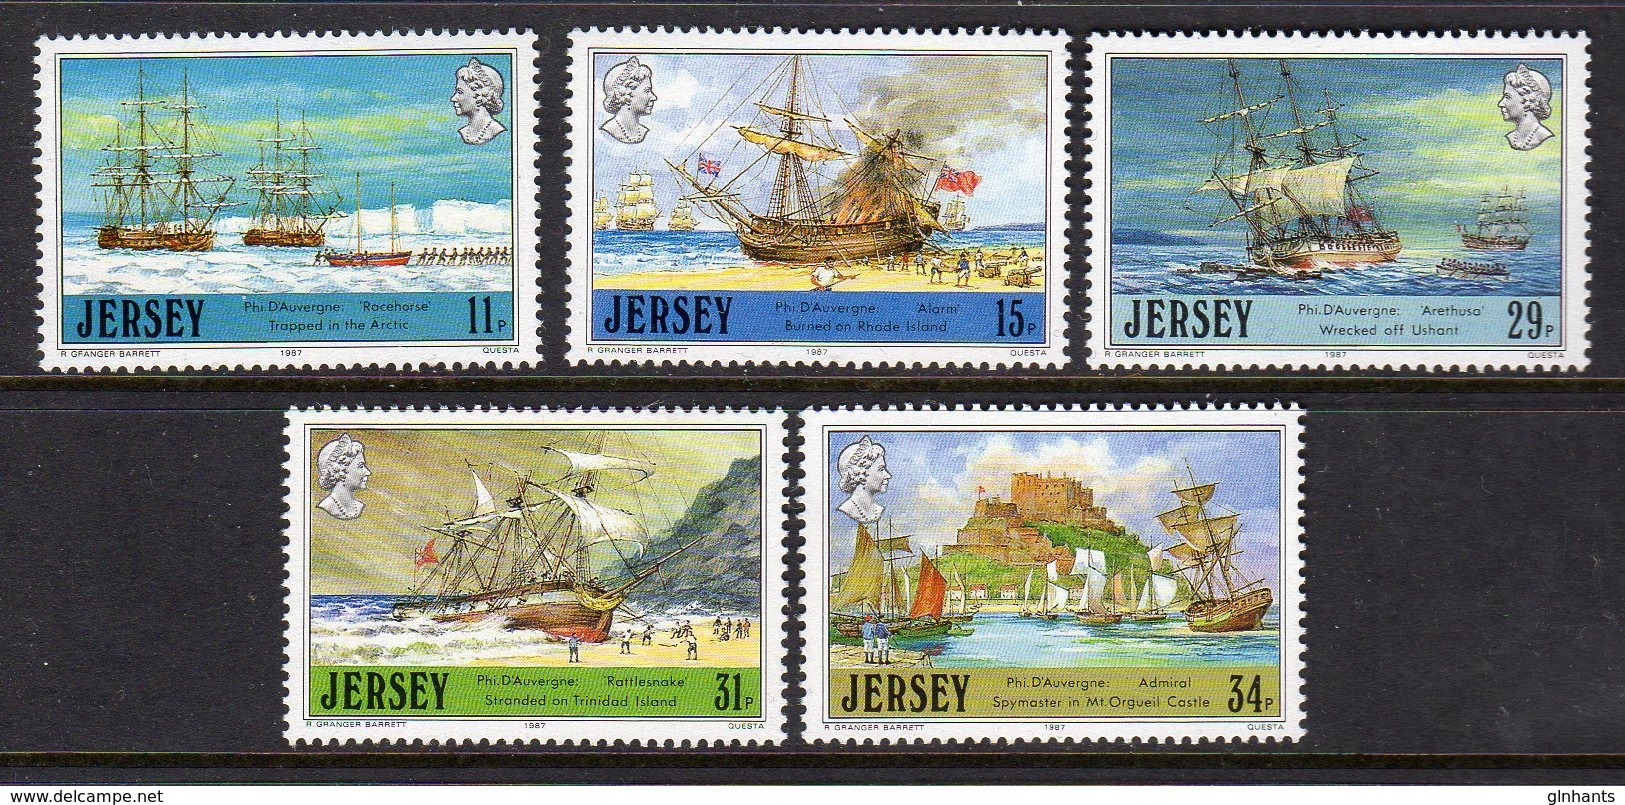 GB JERSEY - 1987 ADVENTURERS SET (5V) SG 417-421 FINE MNH ** - Jersey